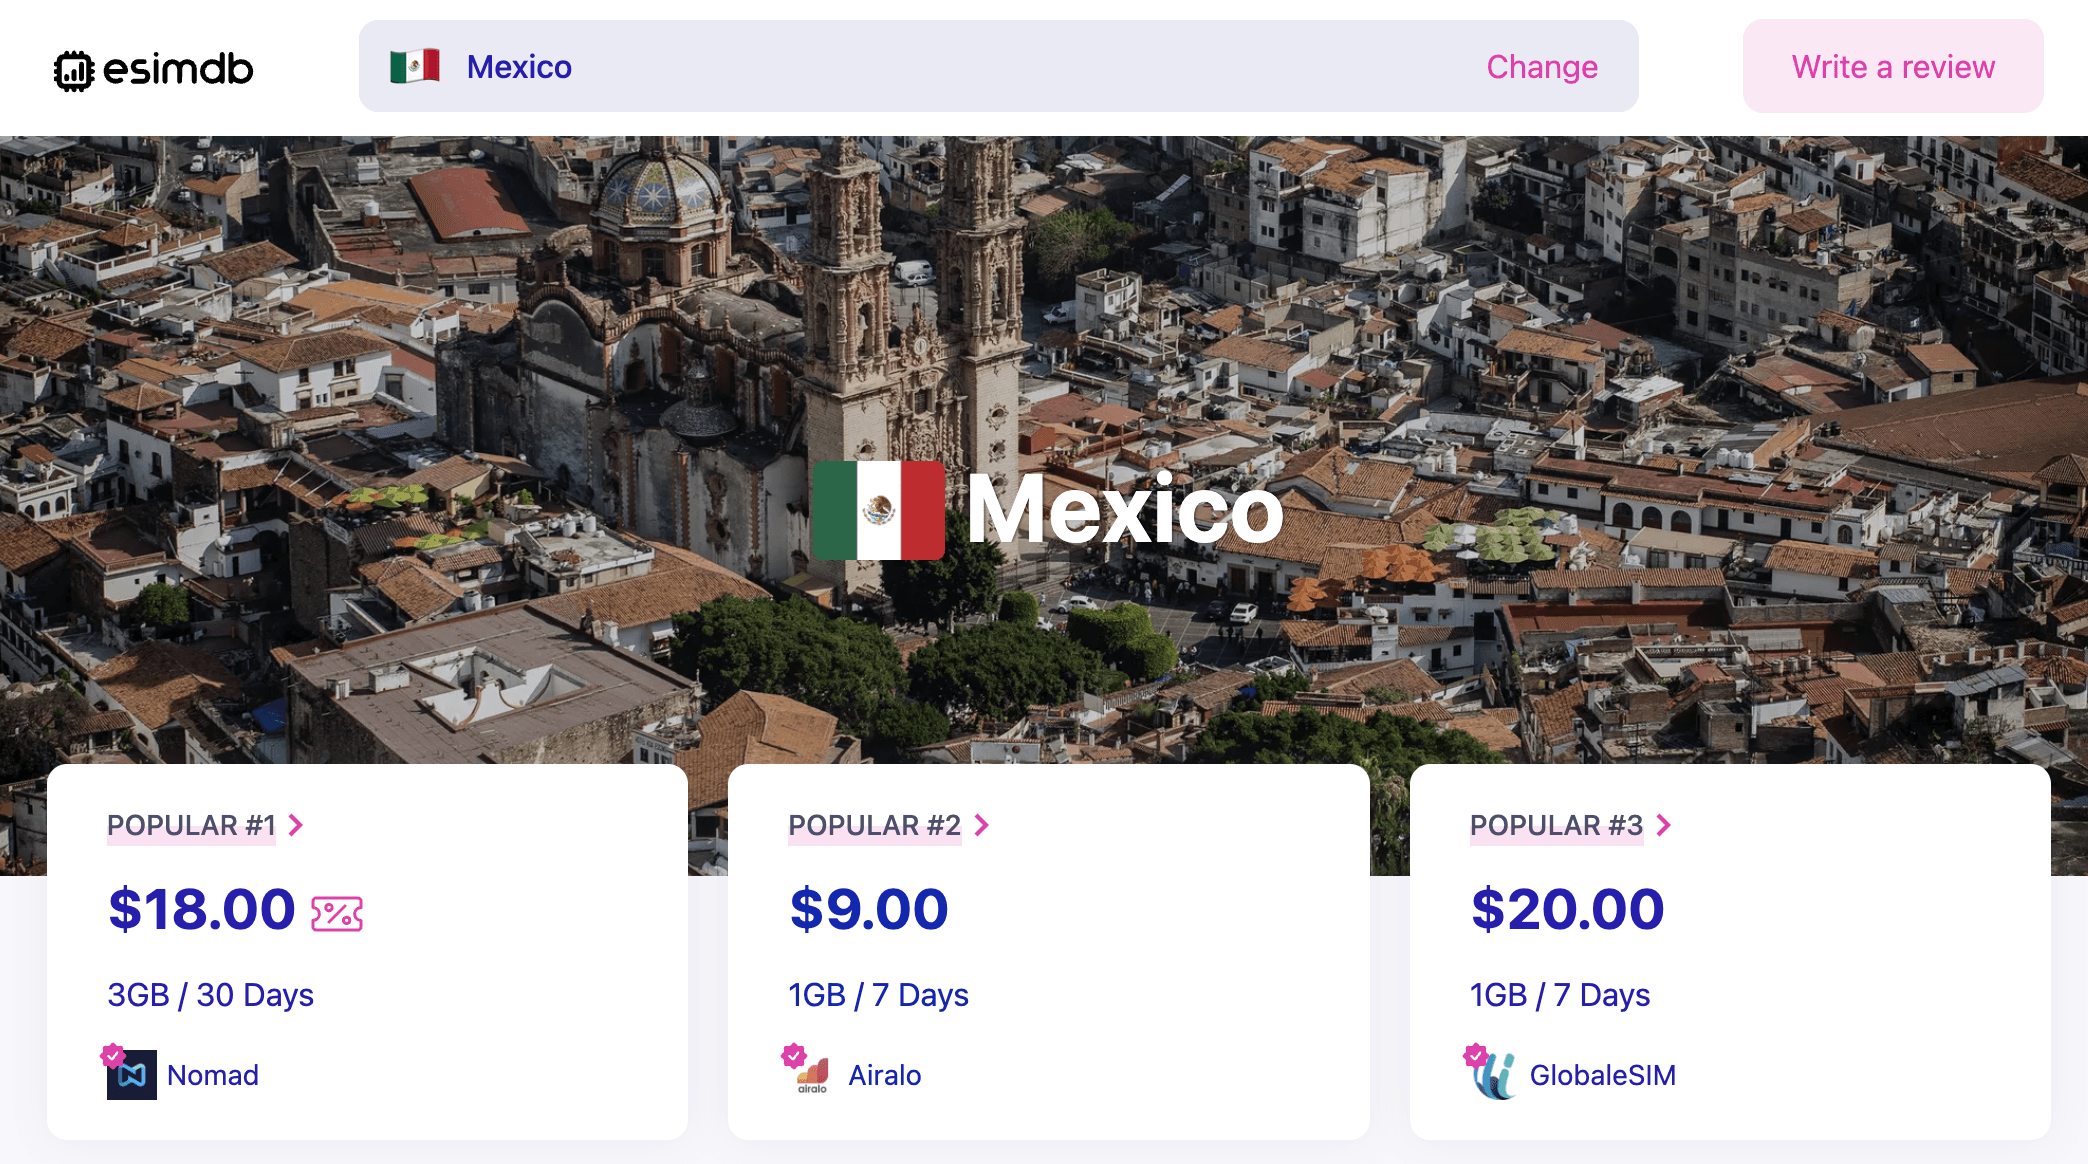 Cheap eSIM plans in Mexico (source: esimdb.com)